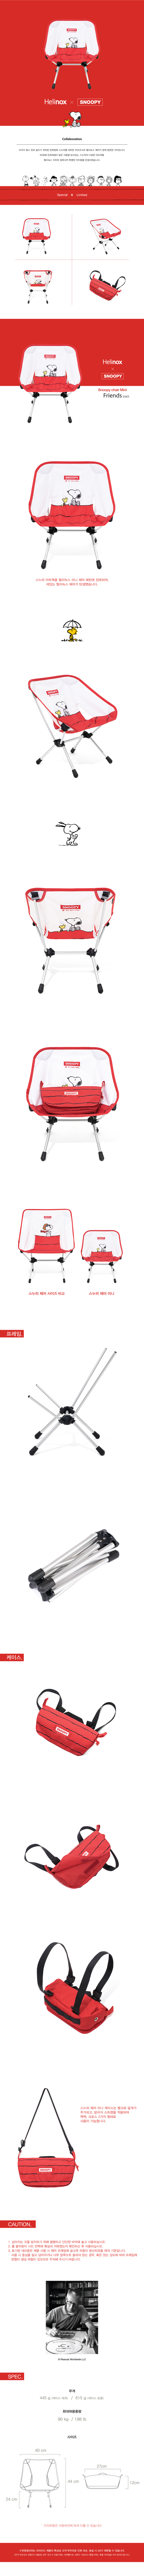 20151023-Snoopy-x-Helinox-Chair-one-Mini_friends.jpg